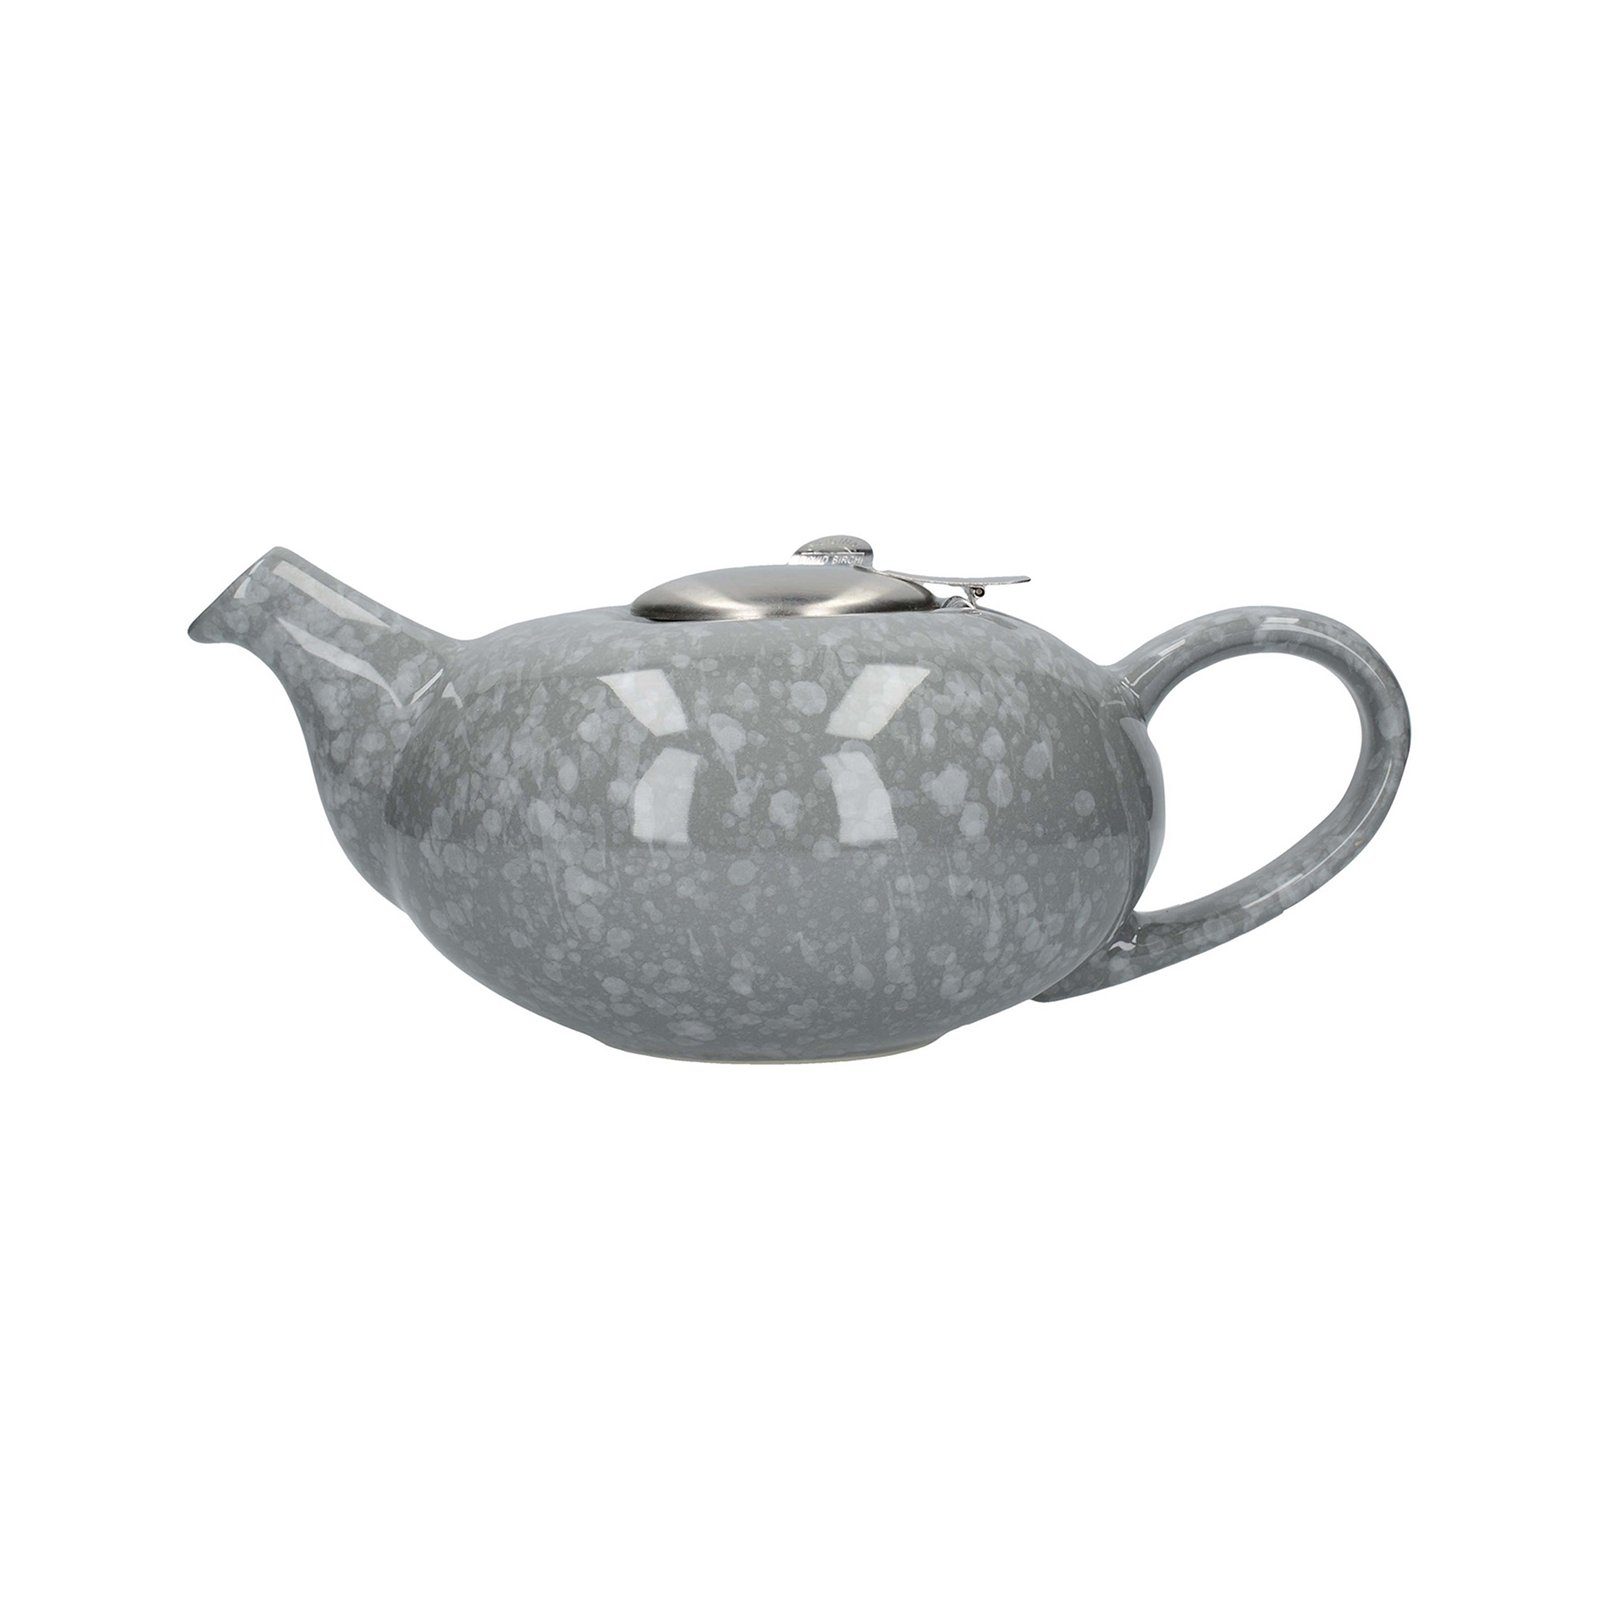 Neuetischkultur Teekanne Teekanne Grau marmoriert L, Tassen 1 1 l glänzend Sieb, mit Keramik, 4